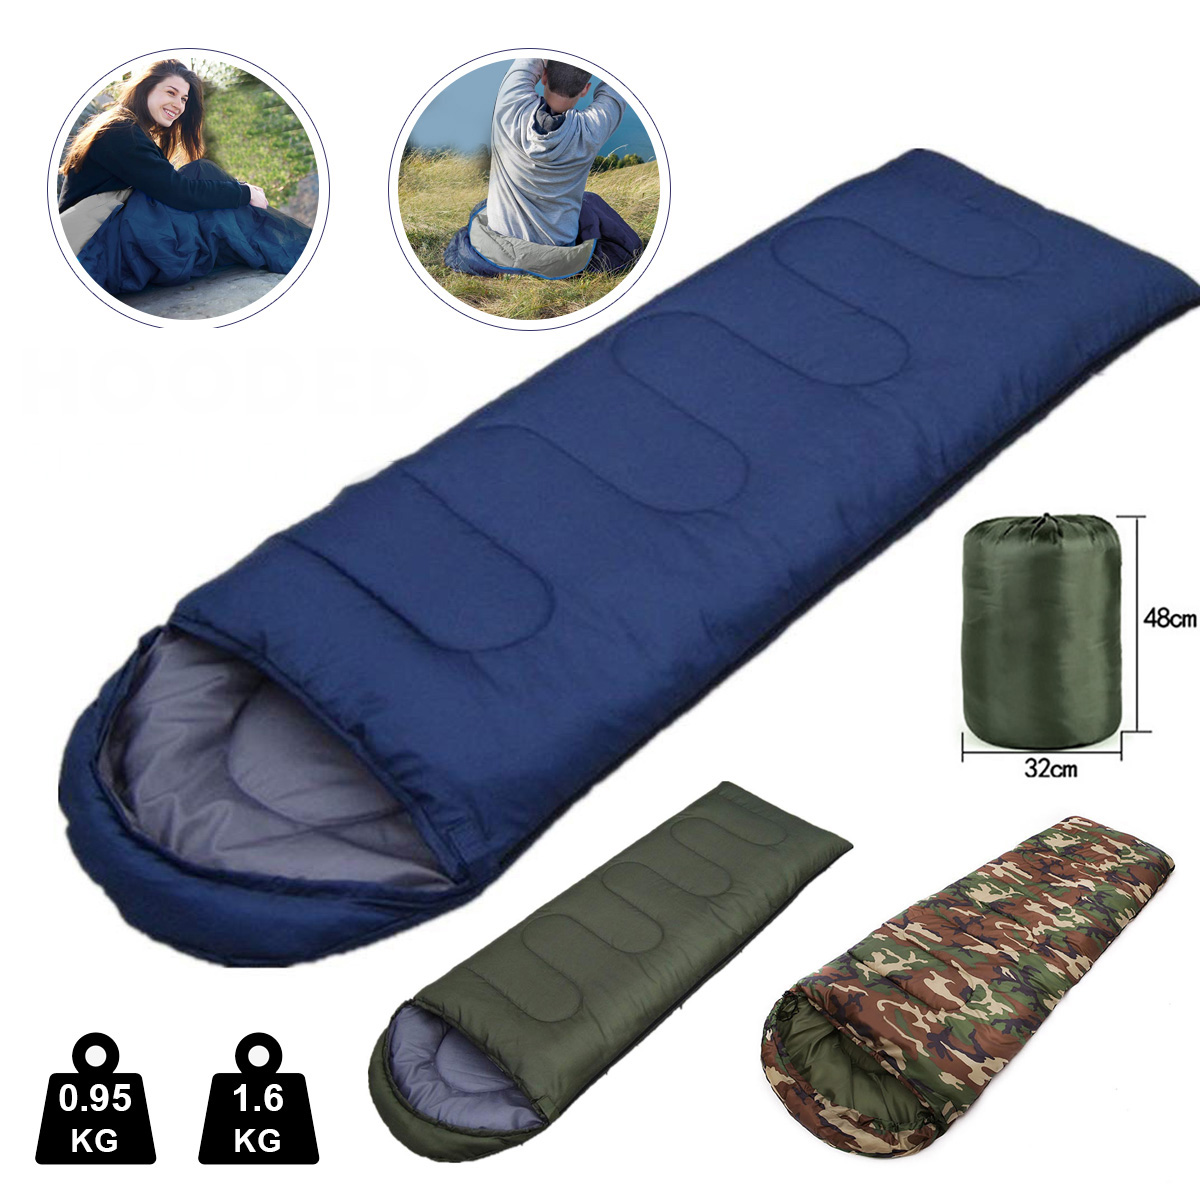 

Portable Lightweight Sleeping Bag Traveling Winter Sleeping Bag Outdoor Camping Hiking Tent Mat